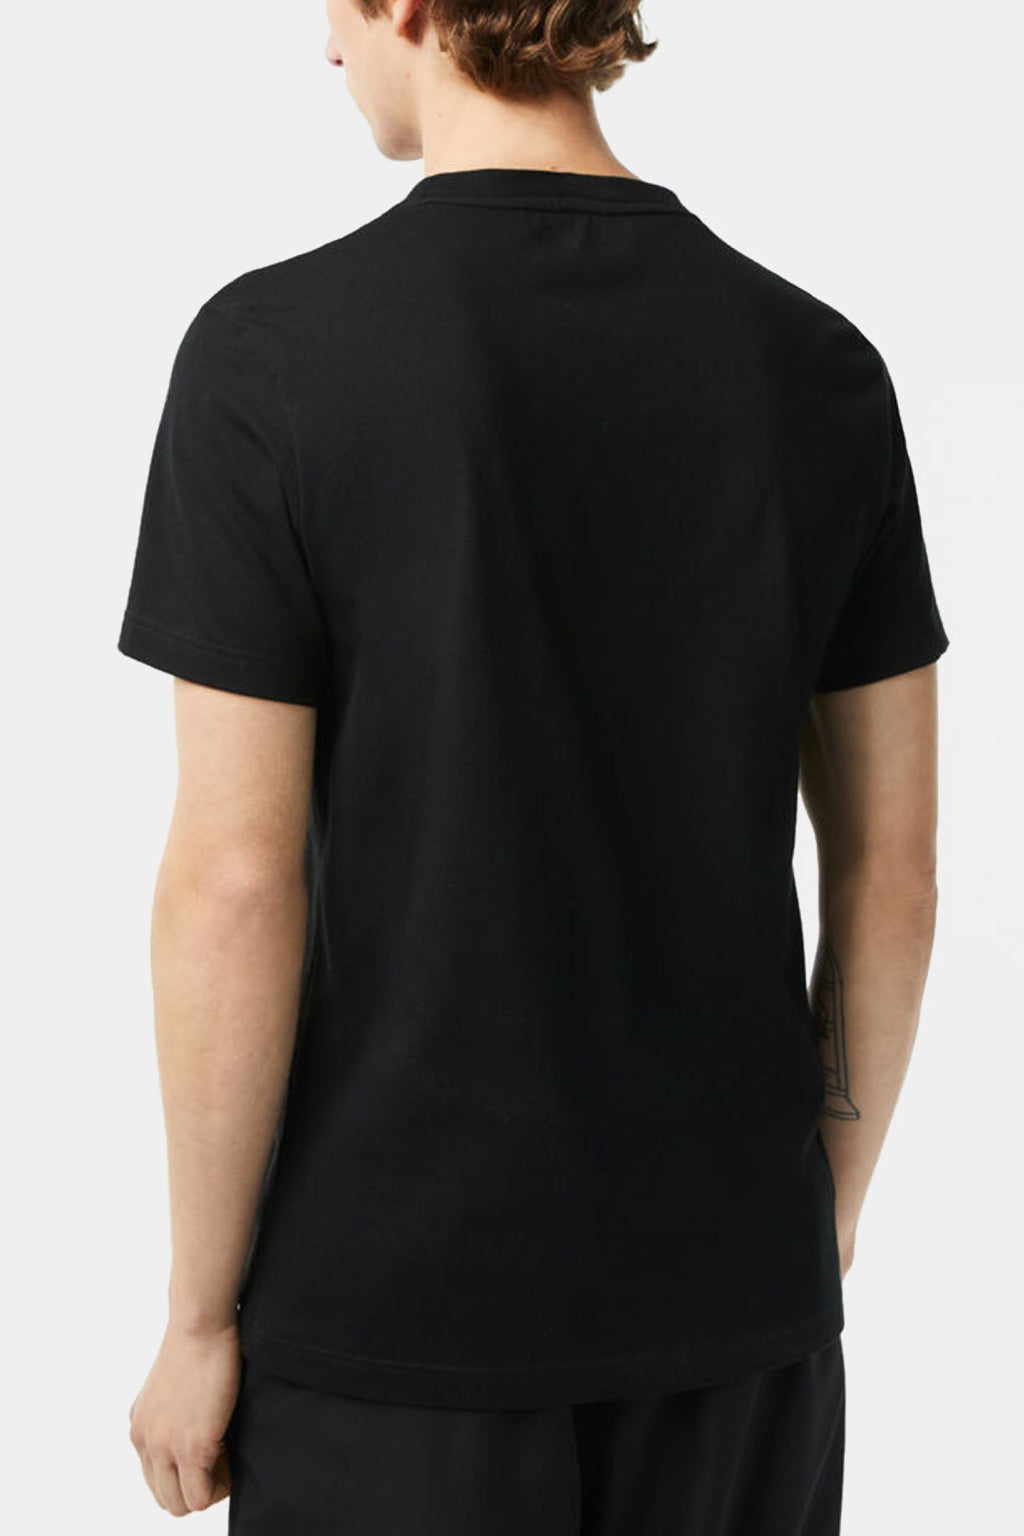 Lacoste - Men’s Lacoste Sport Regular Fit T-shirt With Contrast Branding